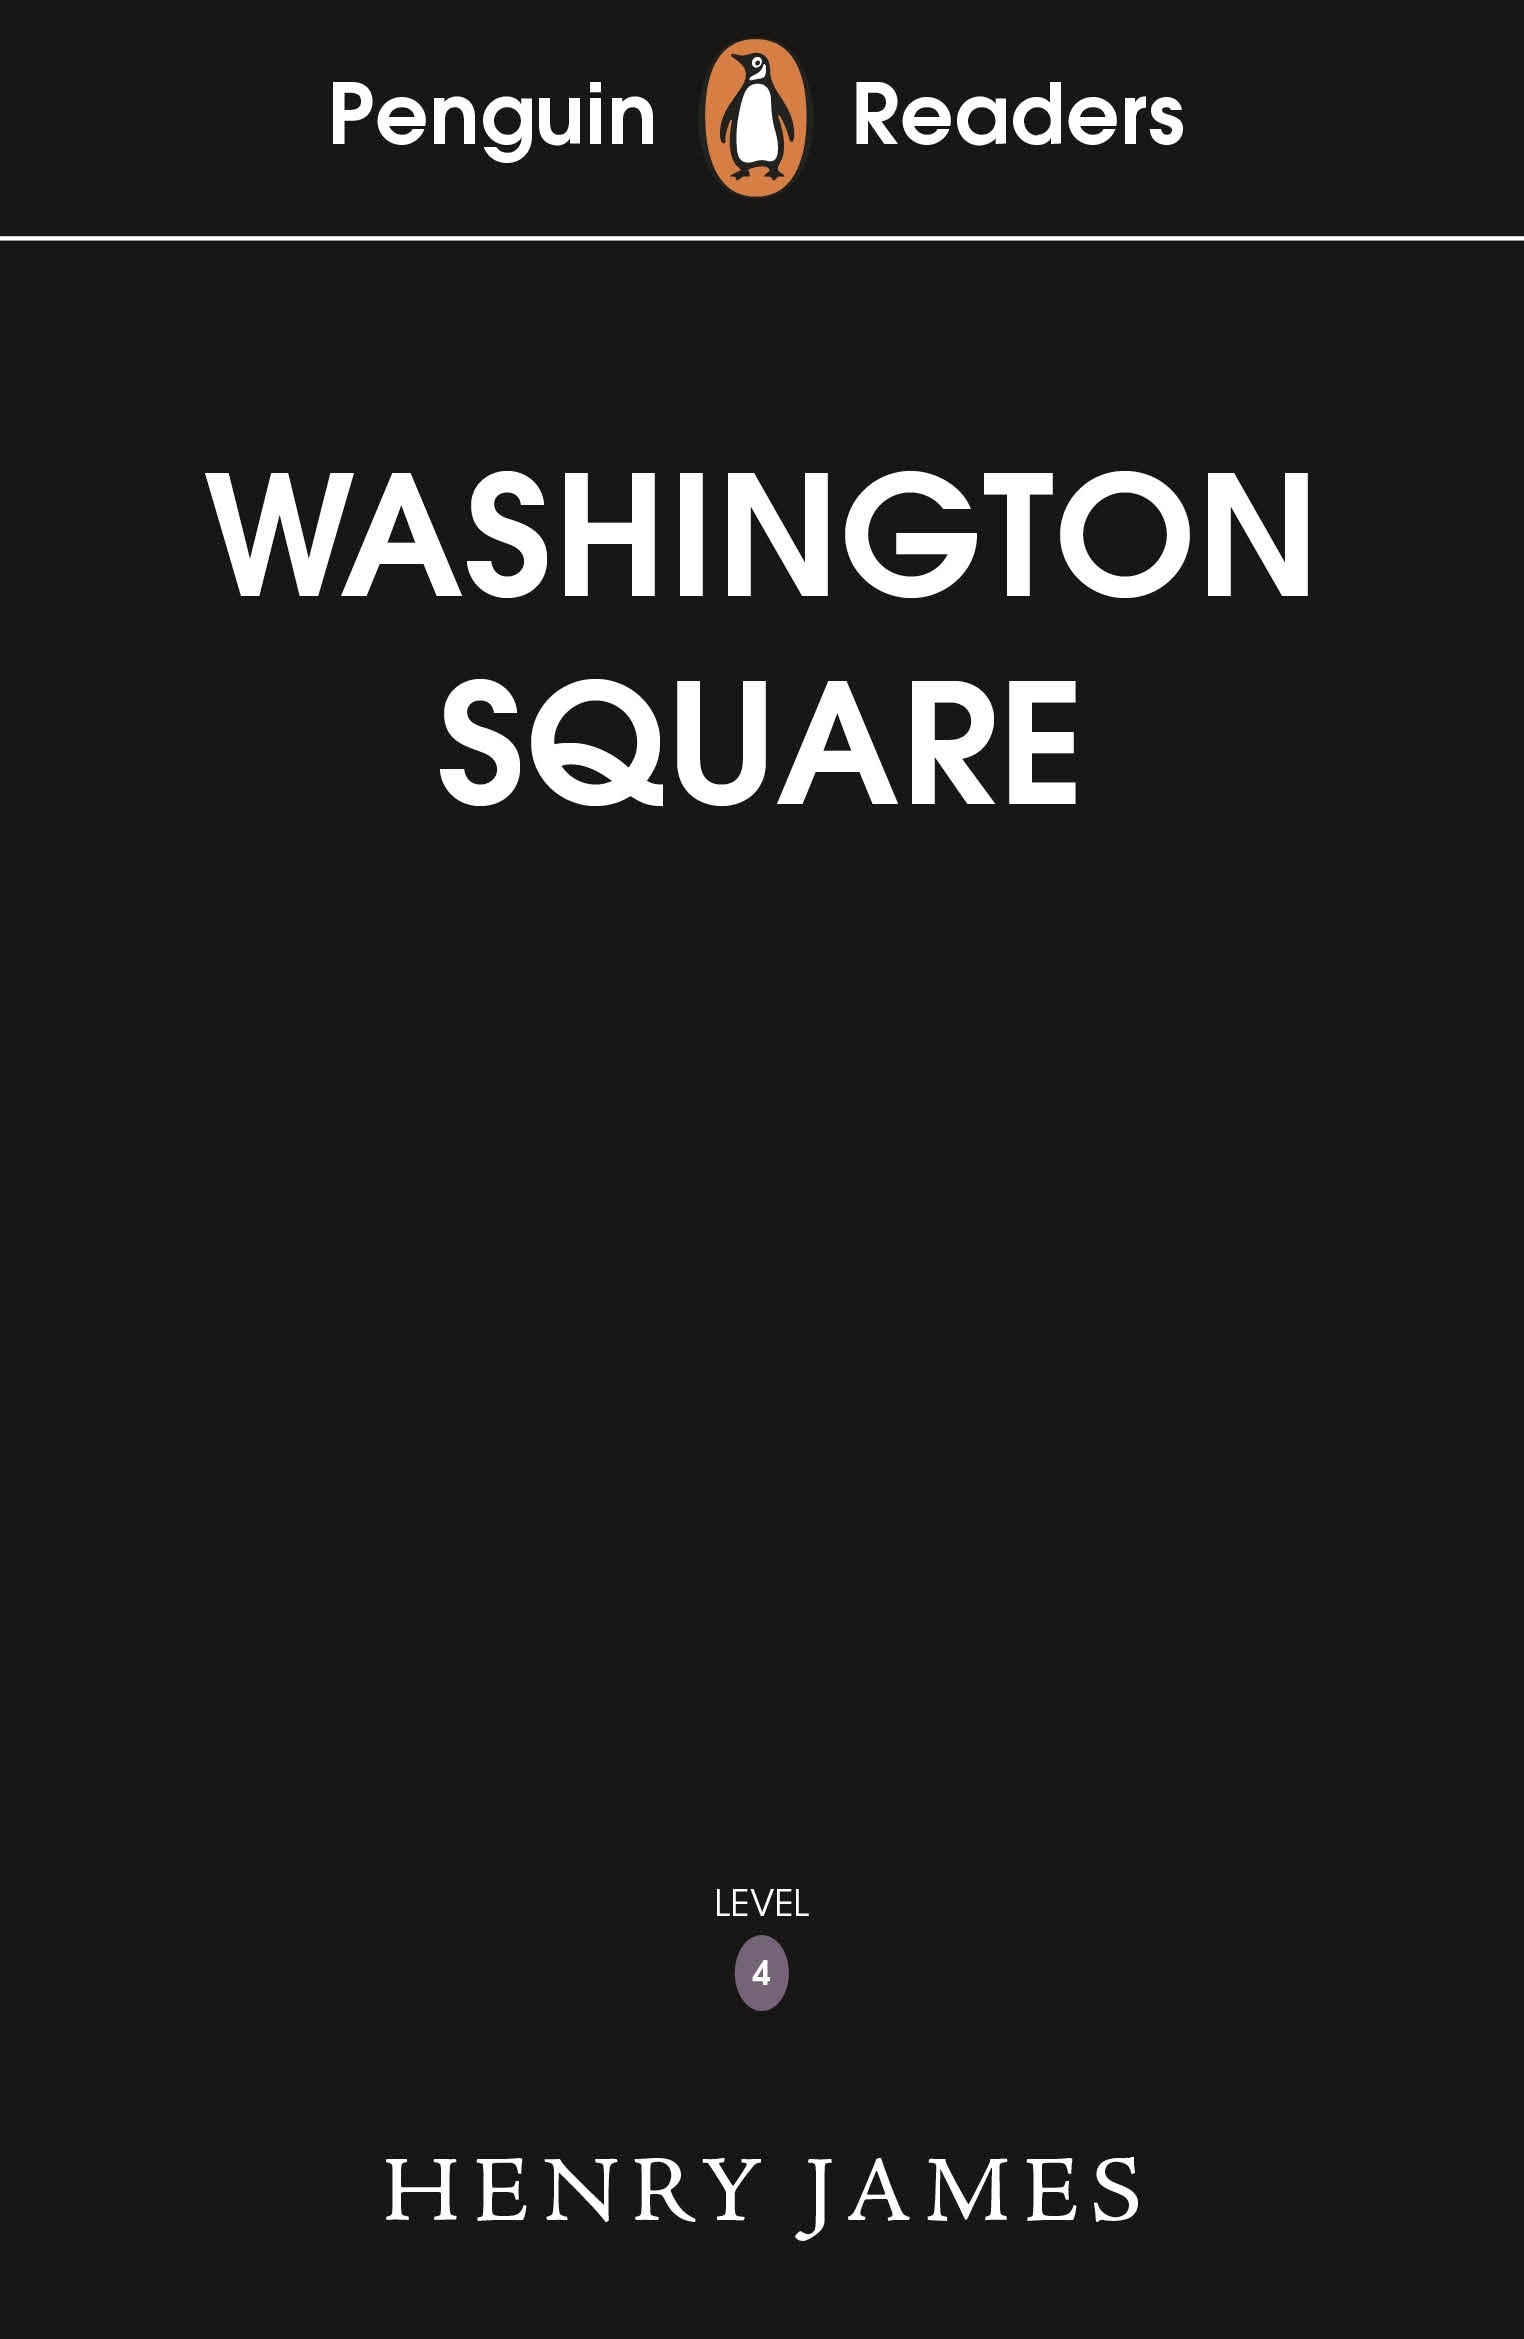 Book “Penguin Readers Level 4: Washington Square (ELT Graded Reader)” by Henry James — February 2, 2023